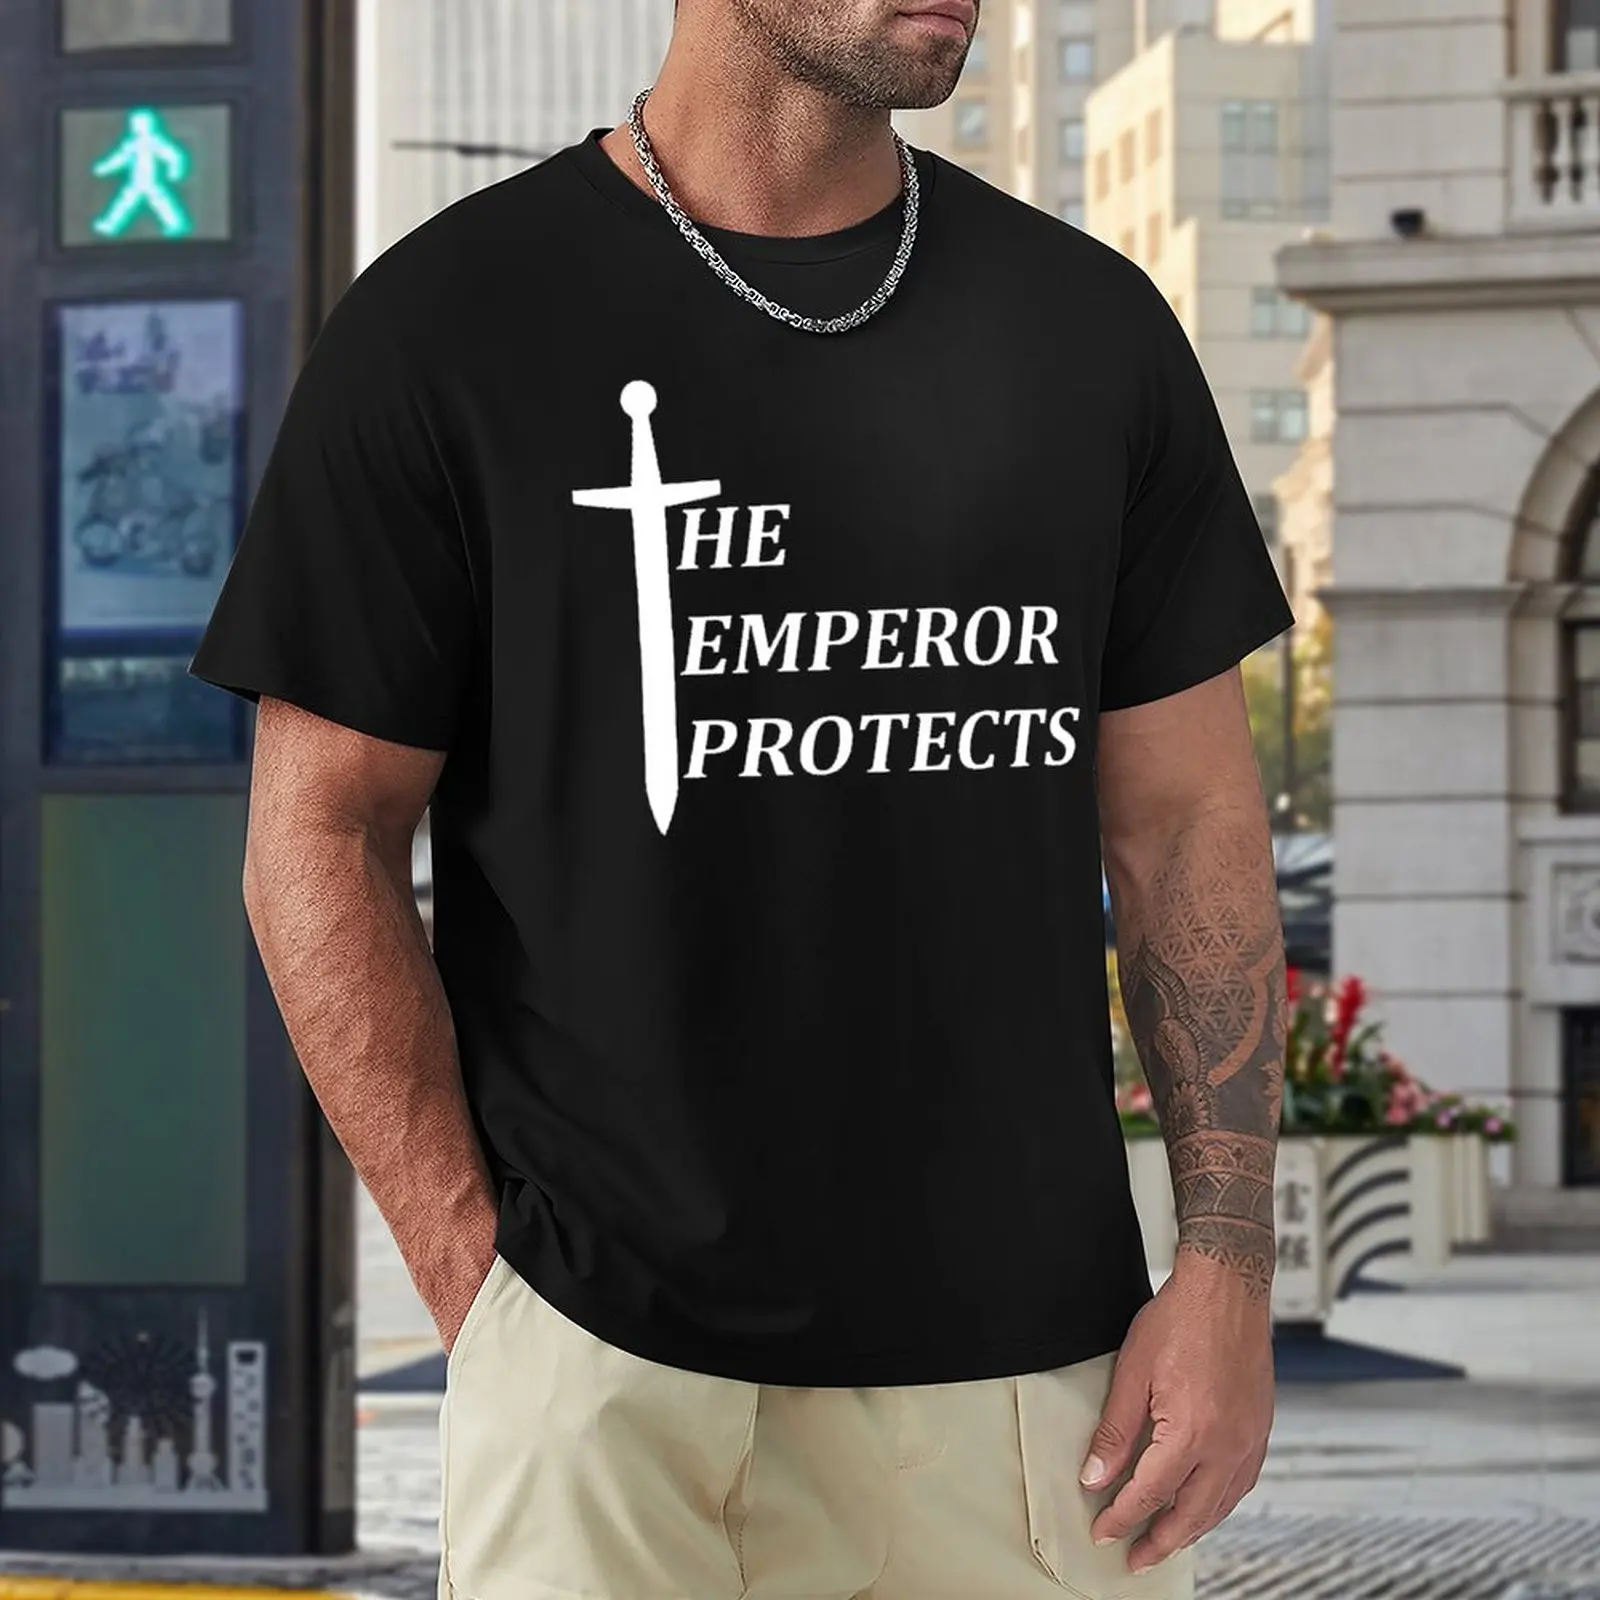 

Футболка The Emperor Protects Essential 1, забавная Новинка, футболка для соревнований по Творческой Активности в стиле Харадзюку, европейский размер